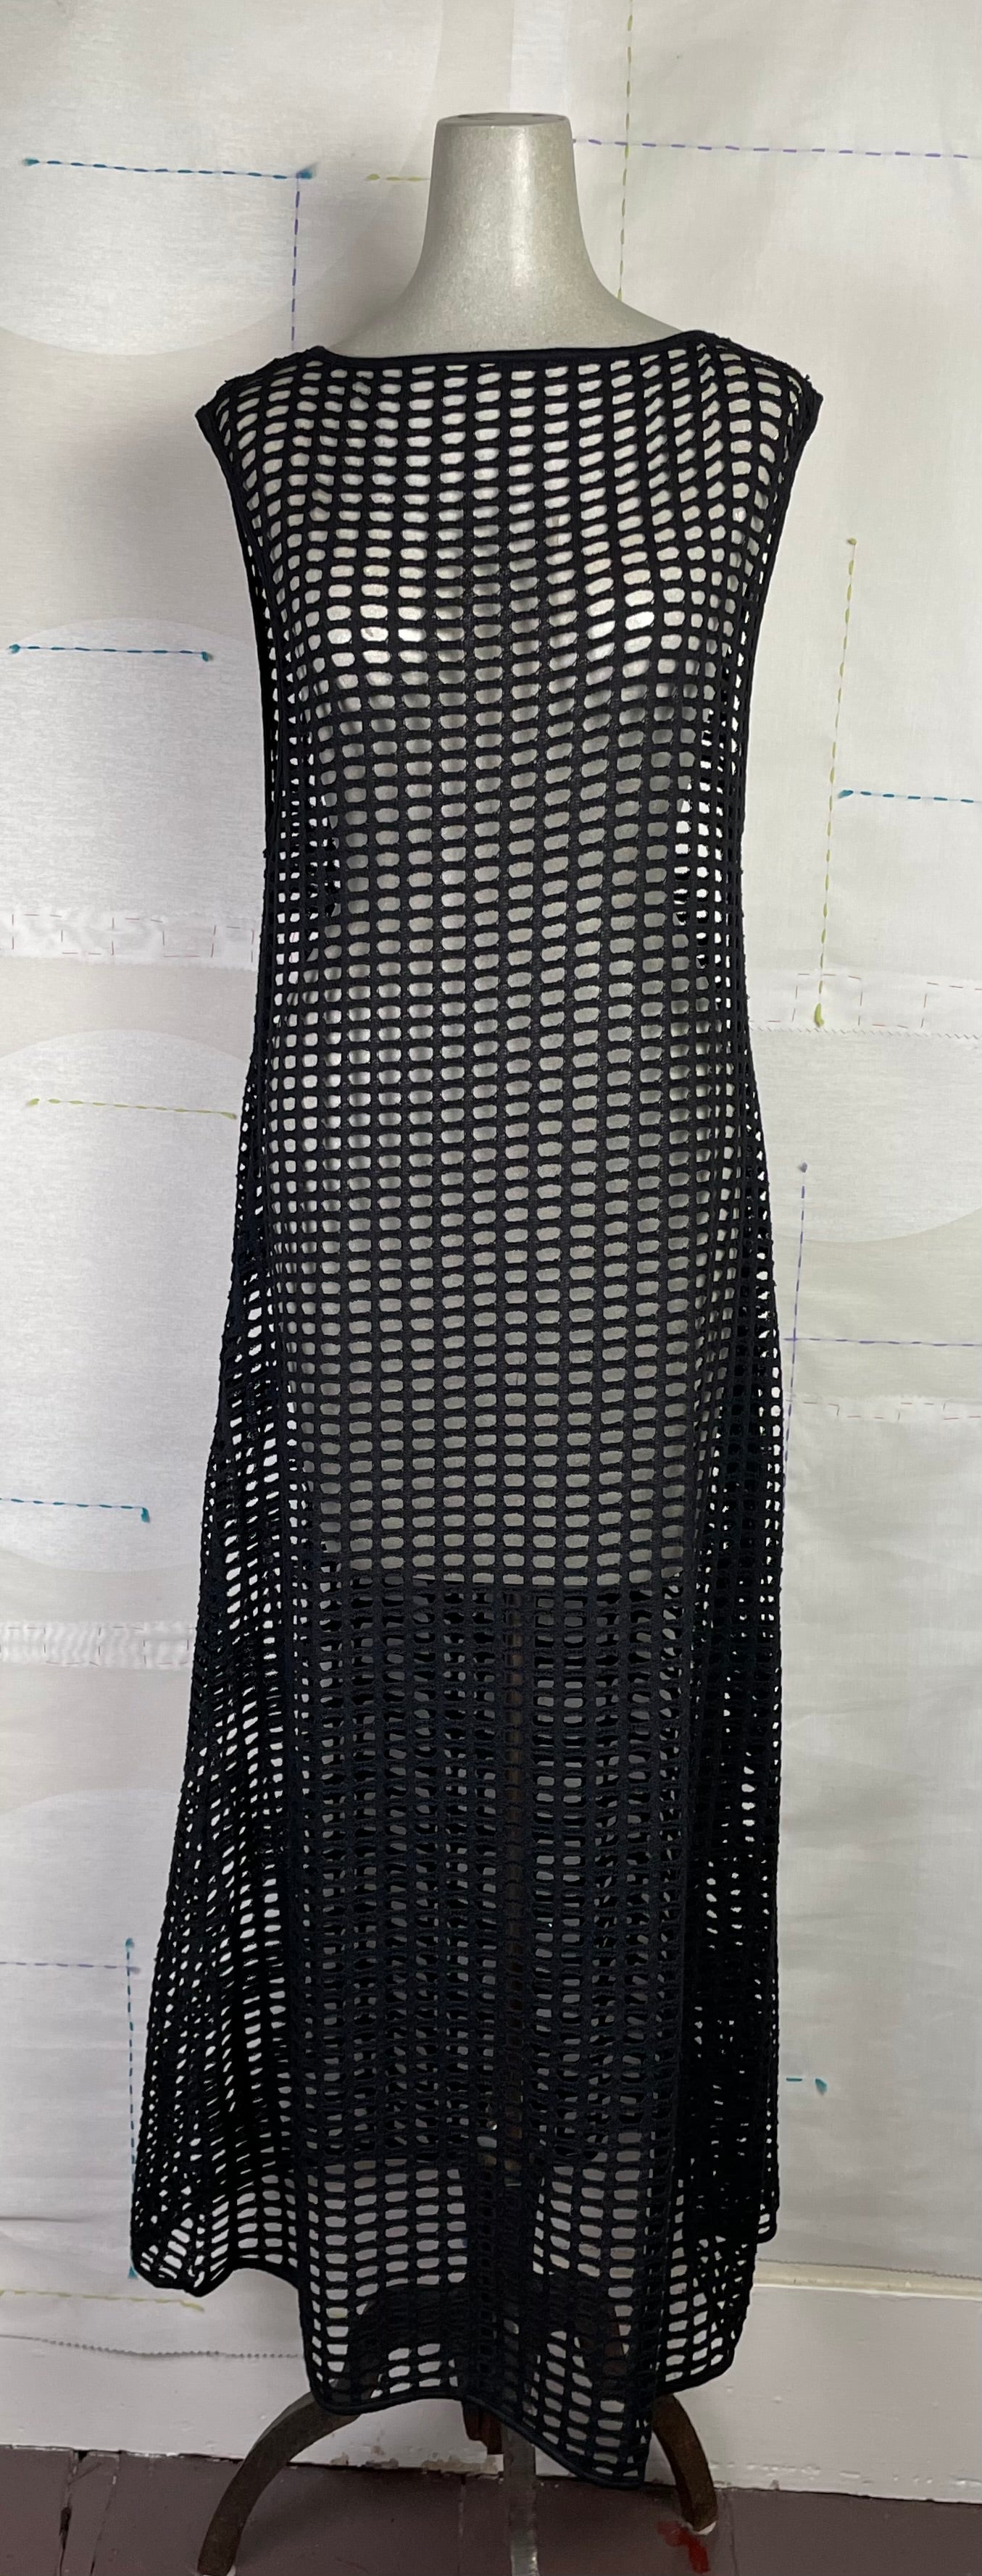 Rita Row  ~  Louis Crochet Dress - Black